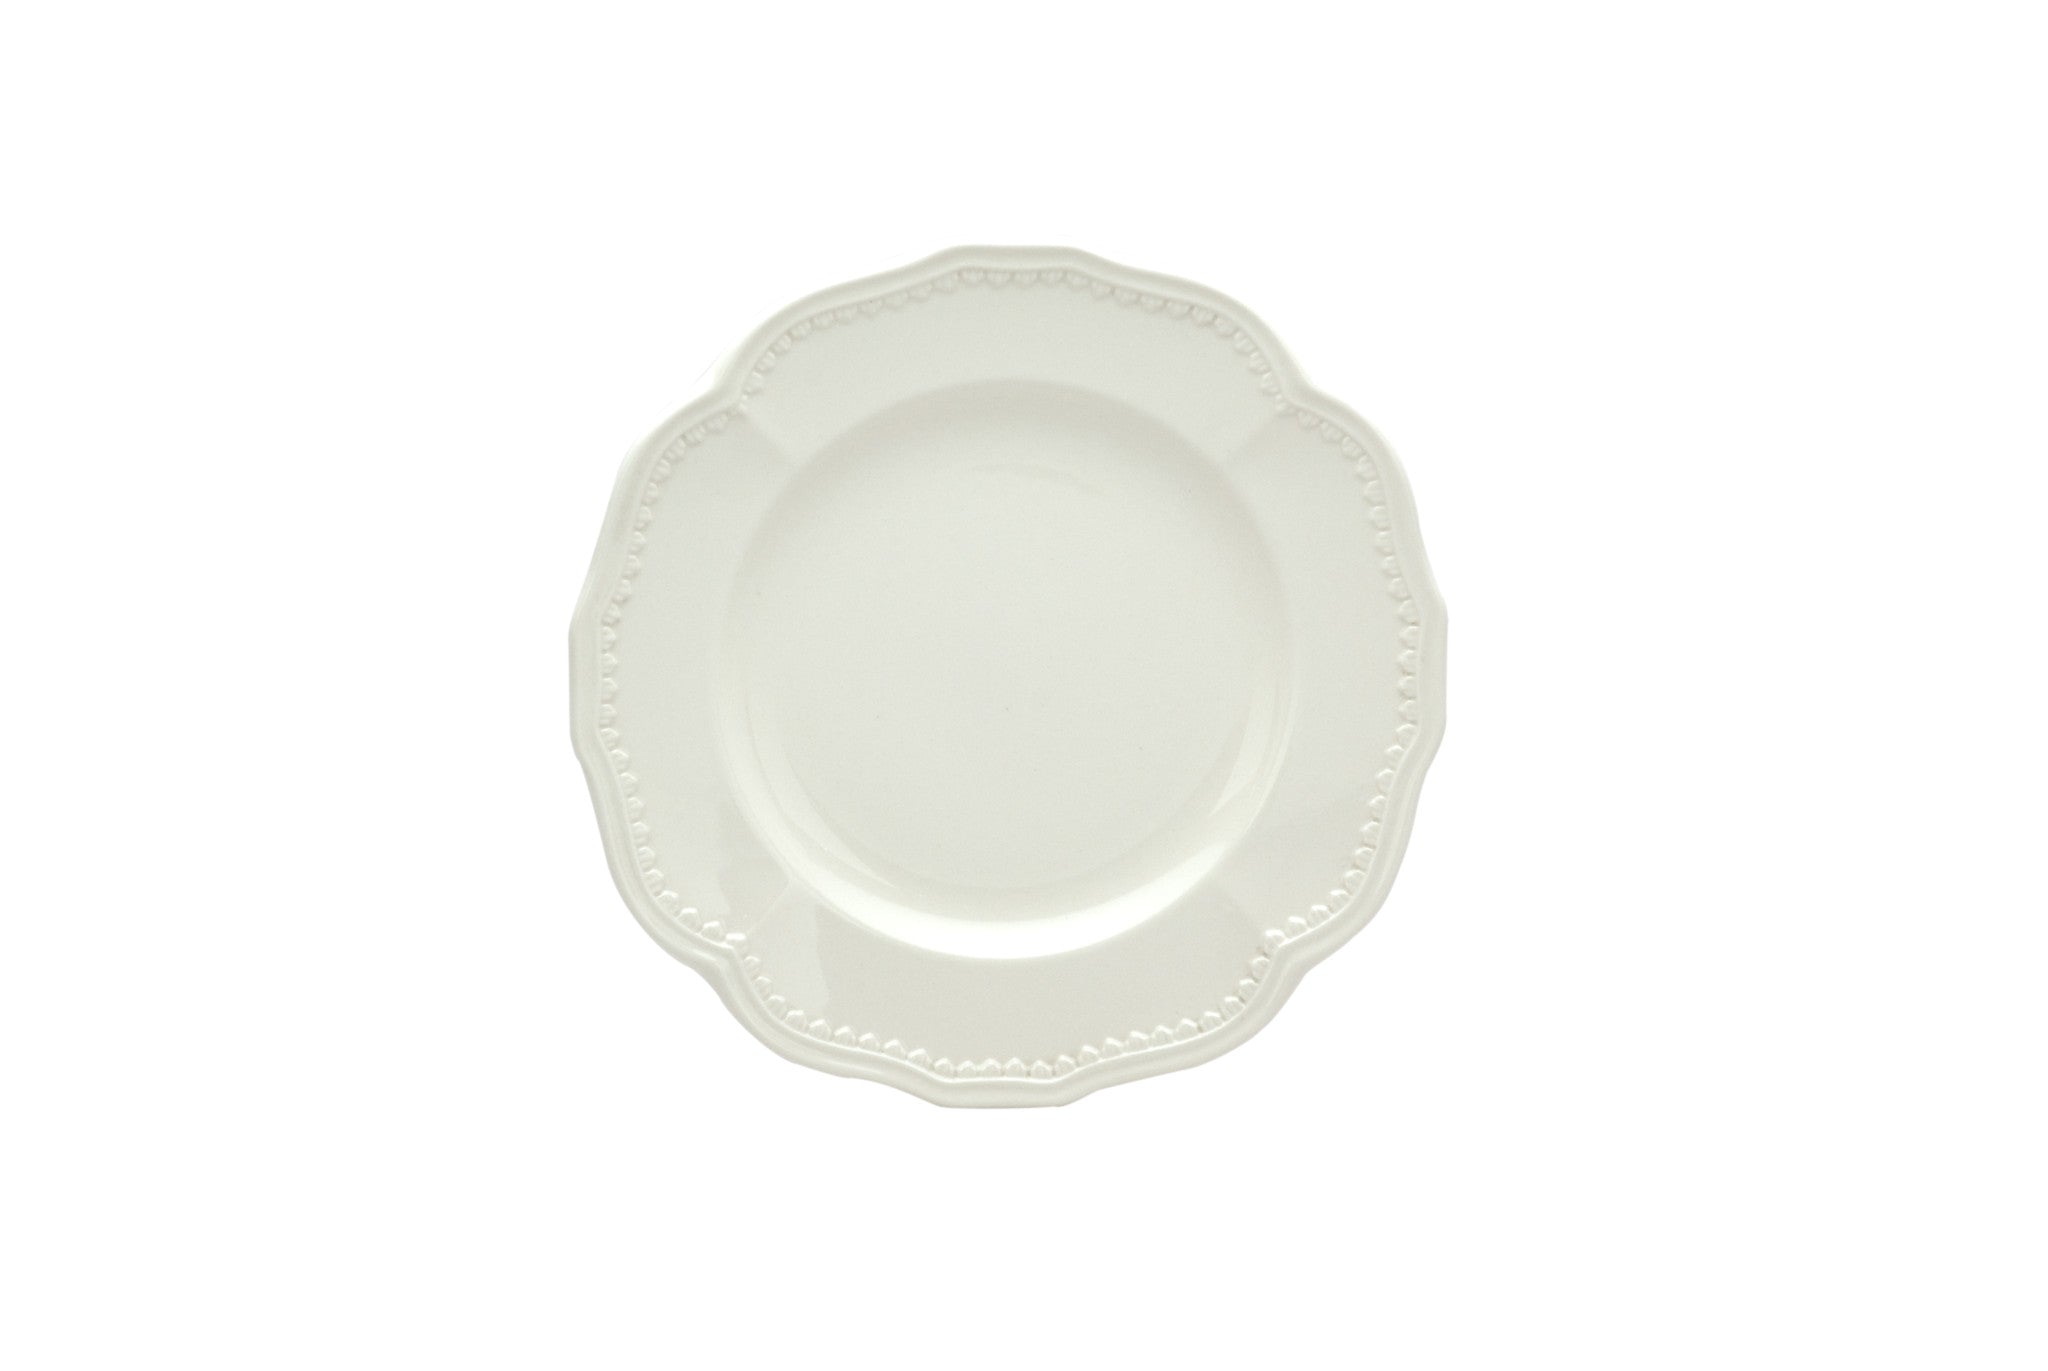 White Four Piece Round Scallop Stoneware Service For Four Salad Plate Set